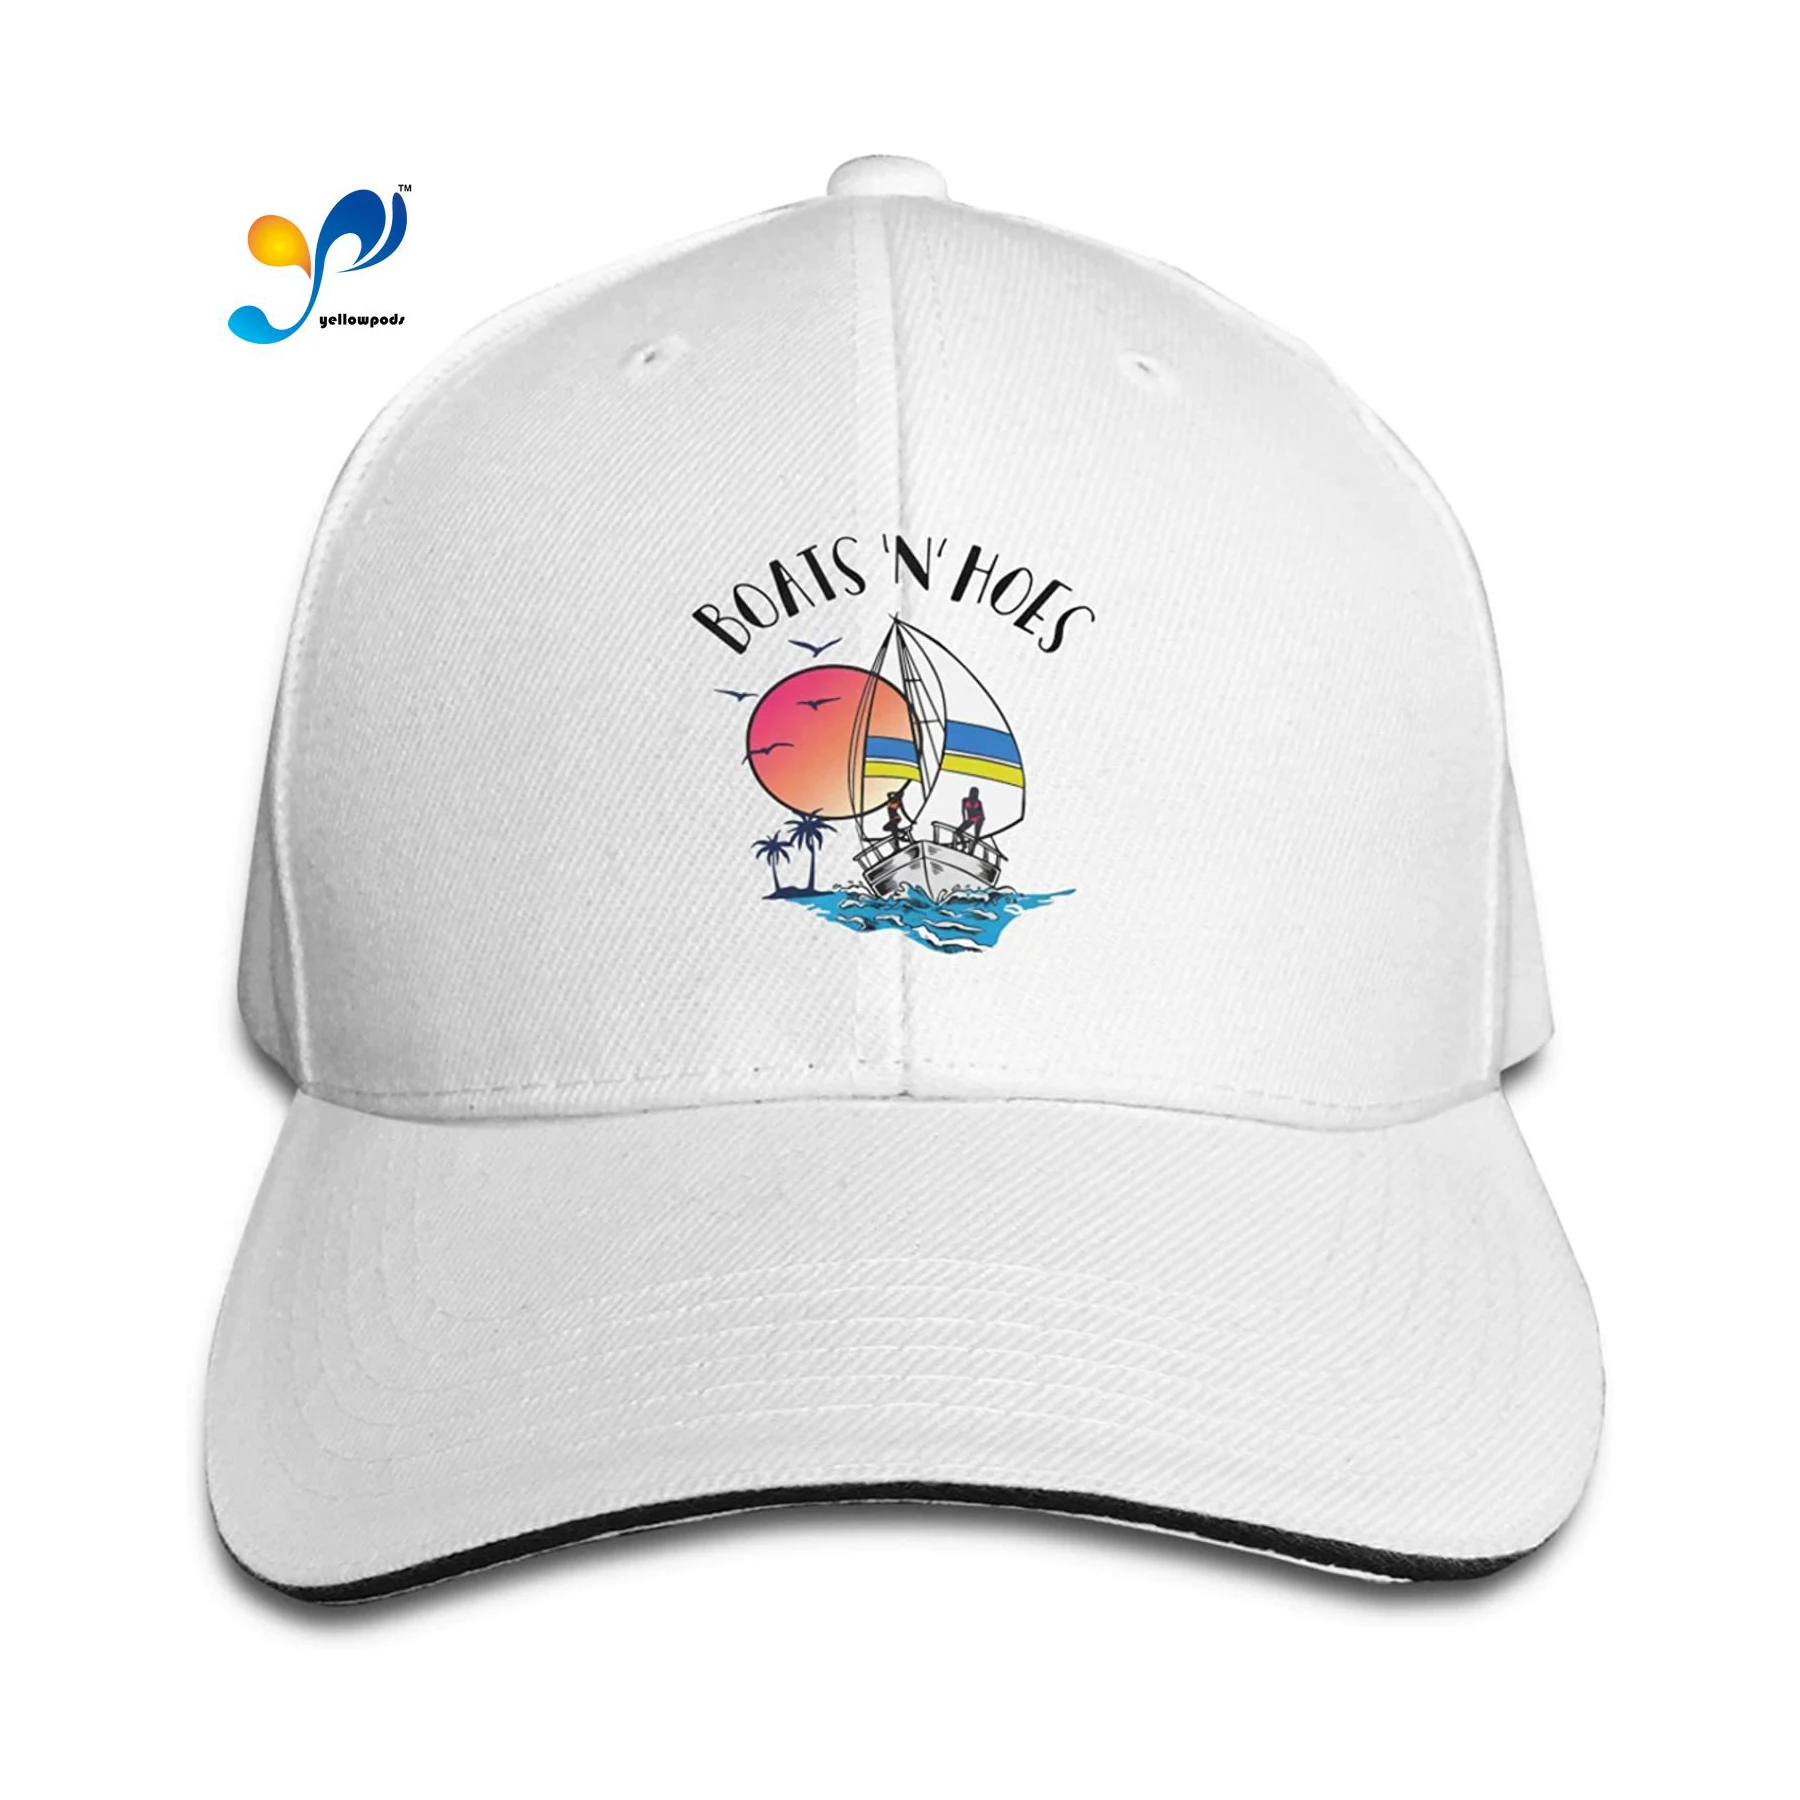 

Moto Gp Baseball Cap For Men Women Boats 'N Hoes Sandwich Hat Printed Headgear Unisex Casquette Dropshipping